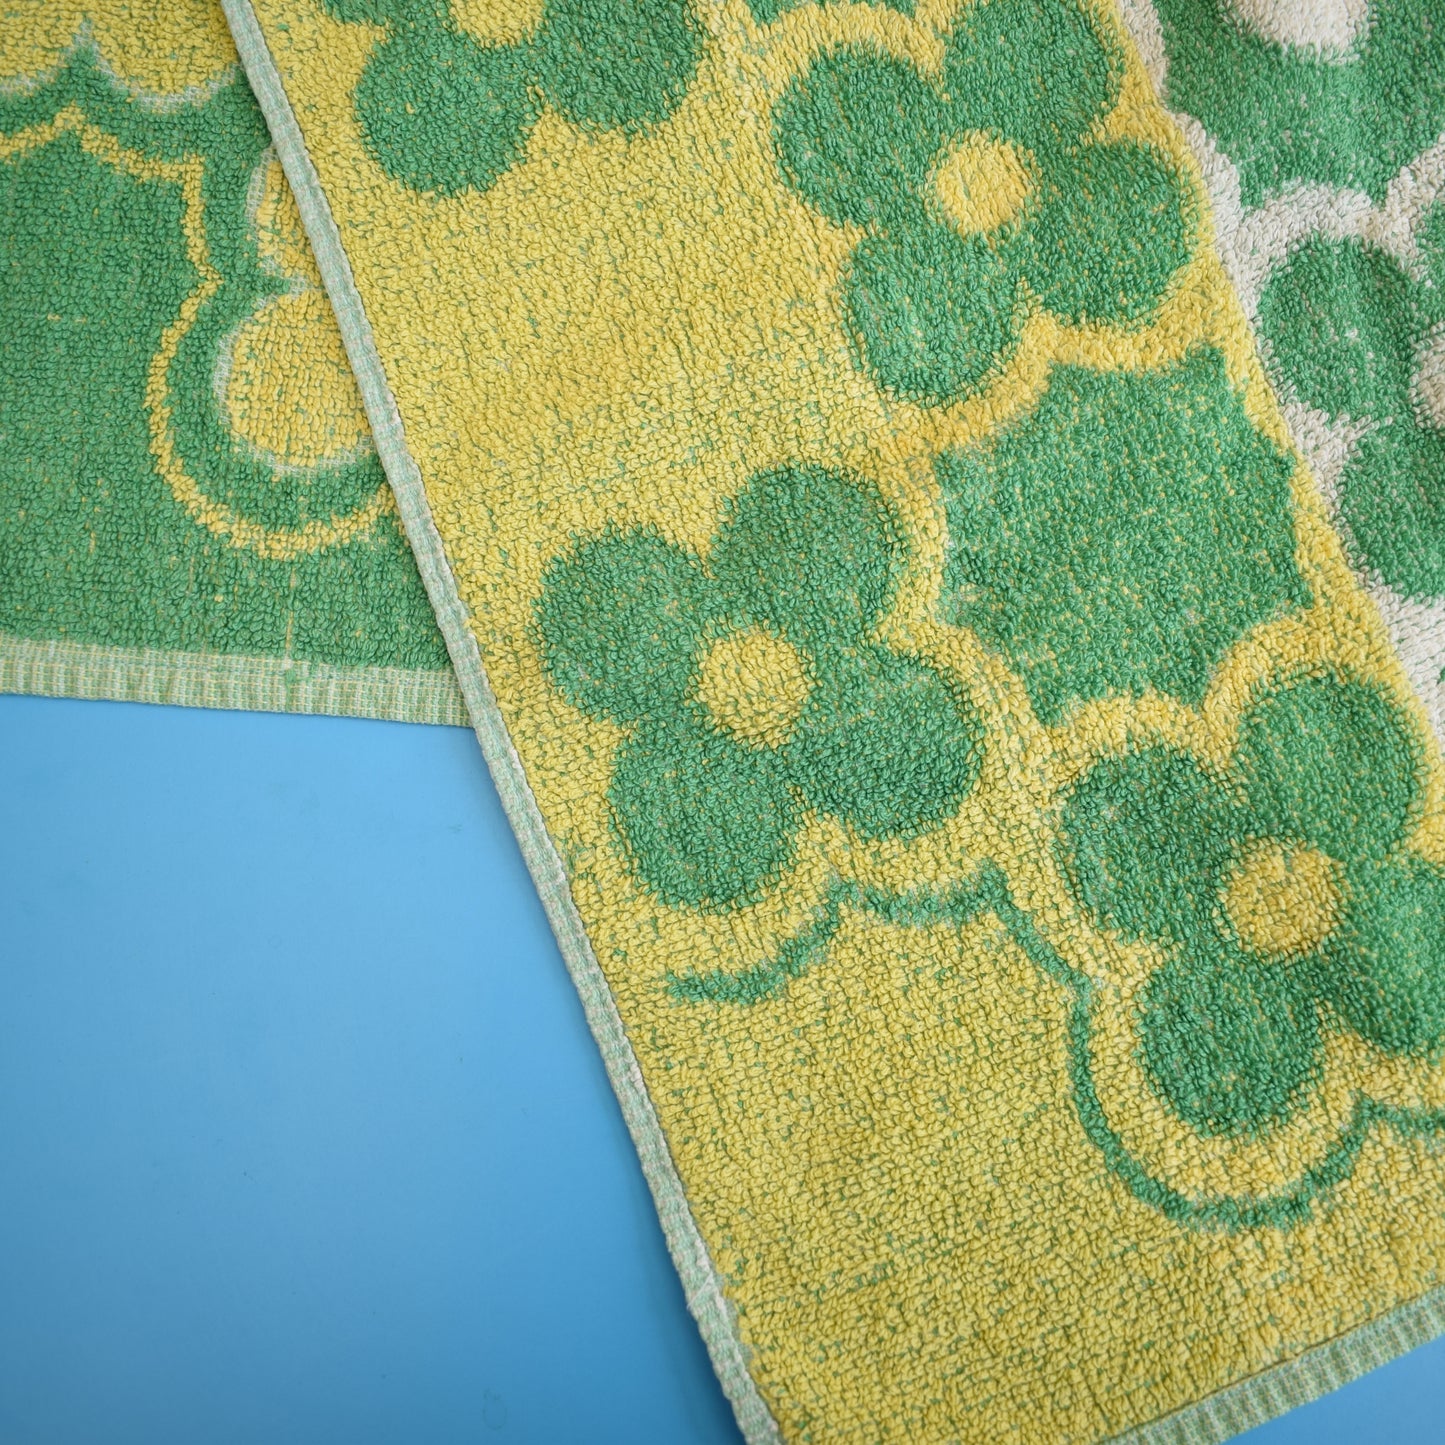 Vintage 1960s Cotton Bath Towel - Green/ Yellow